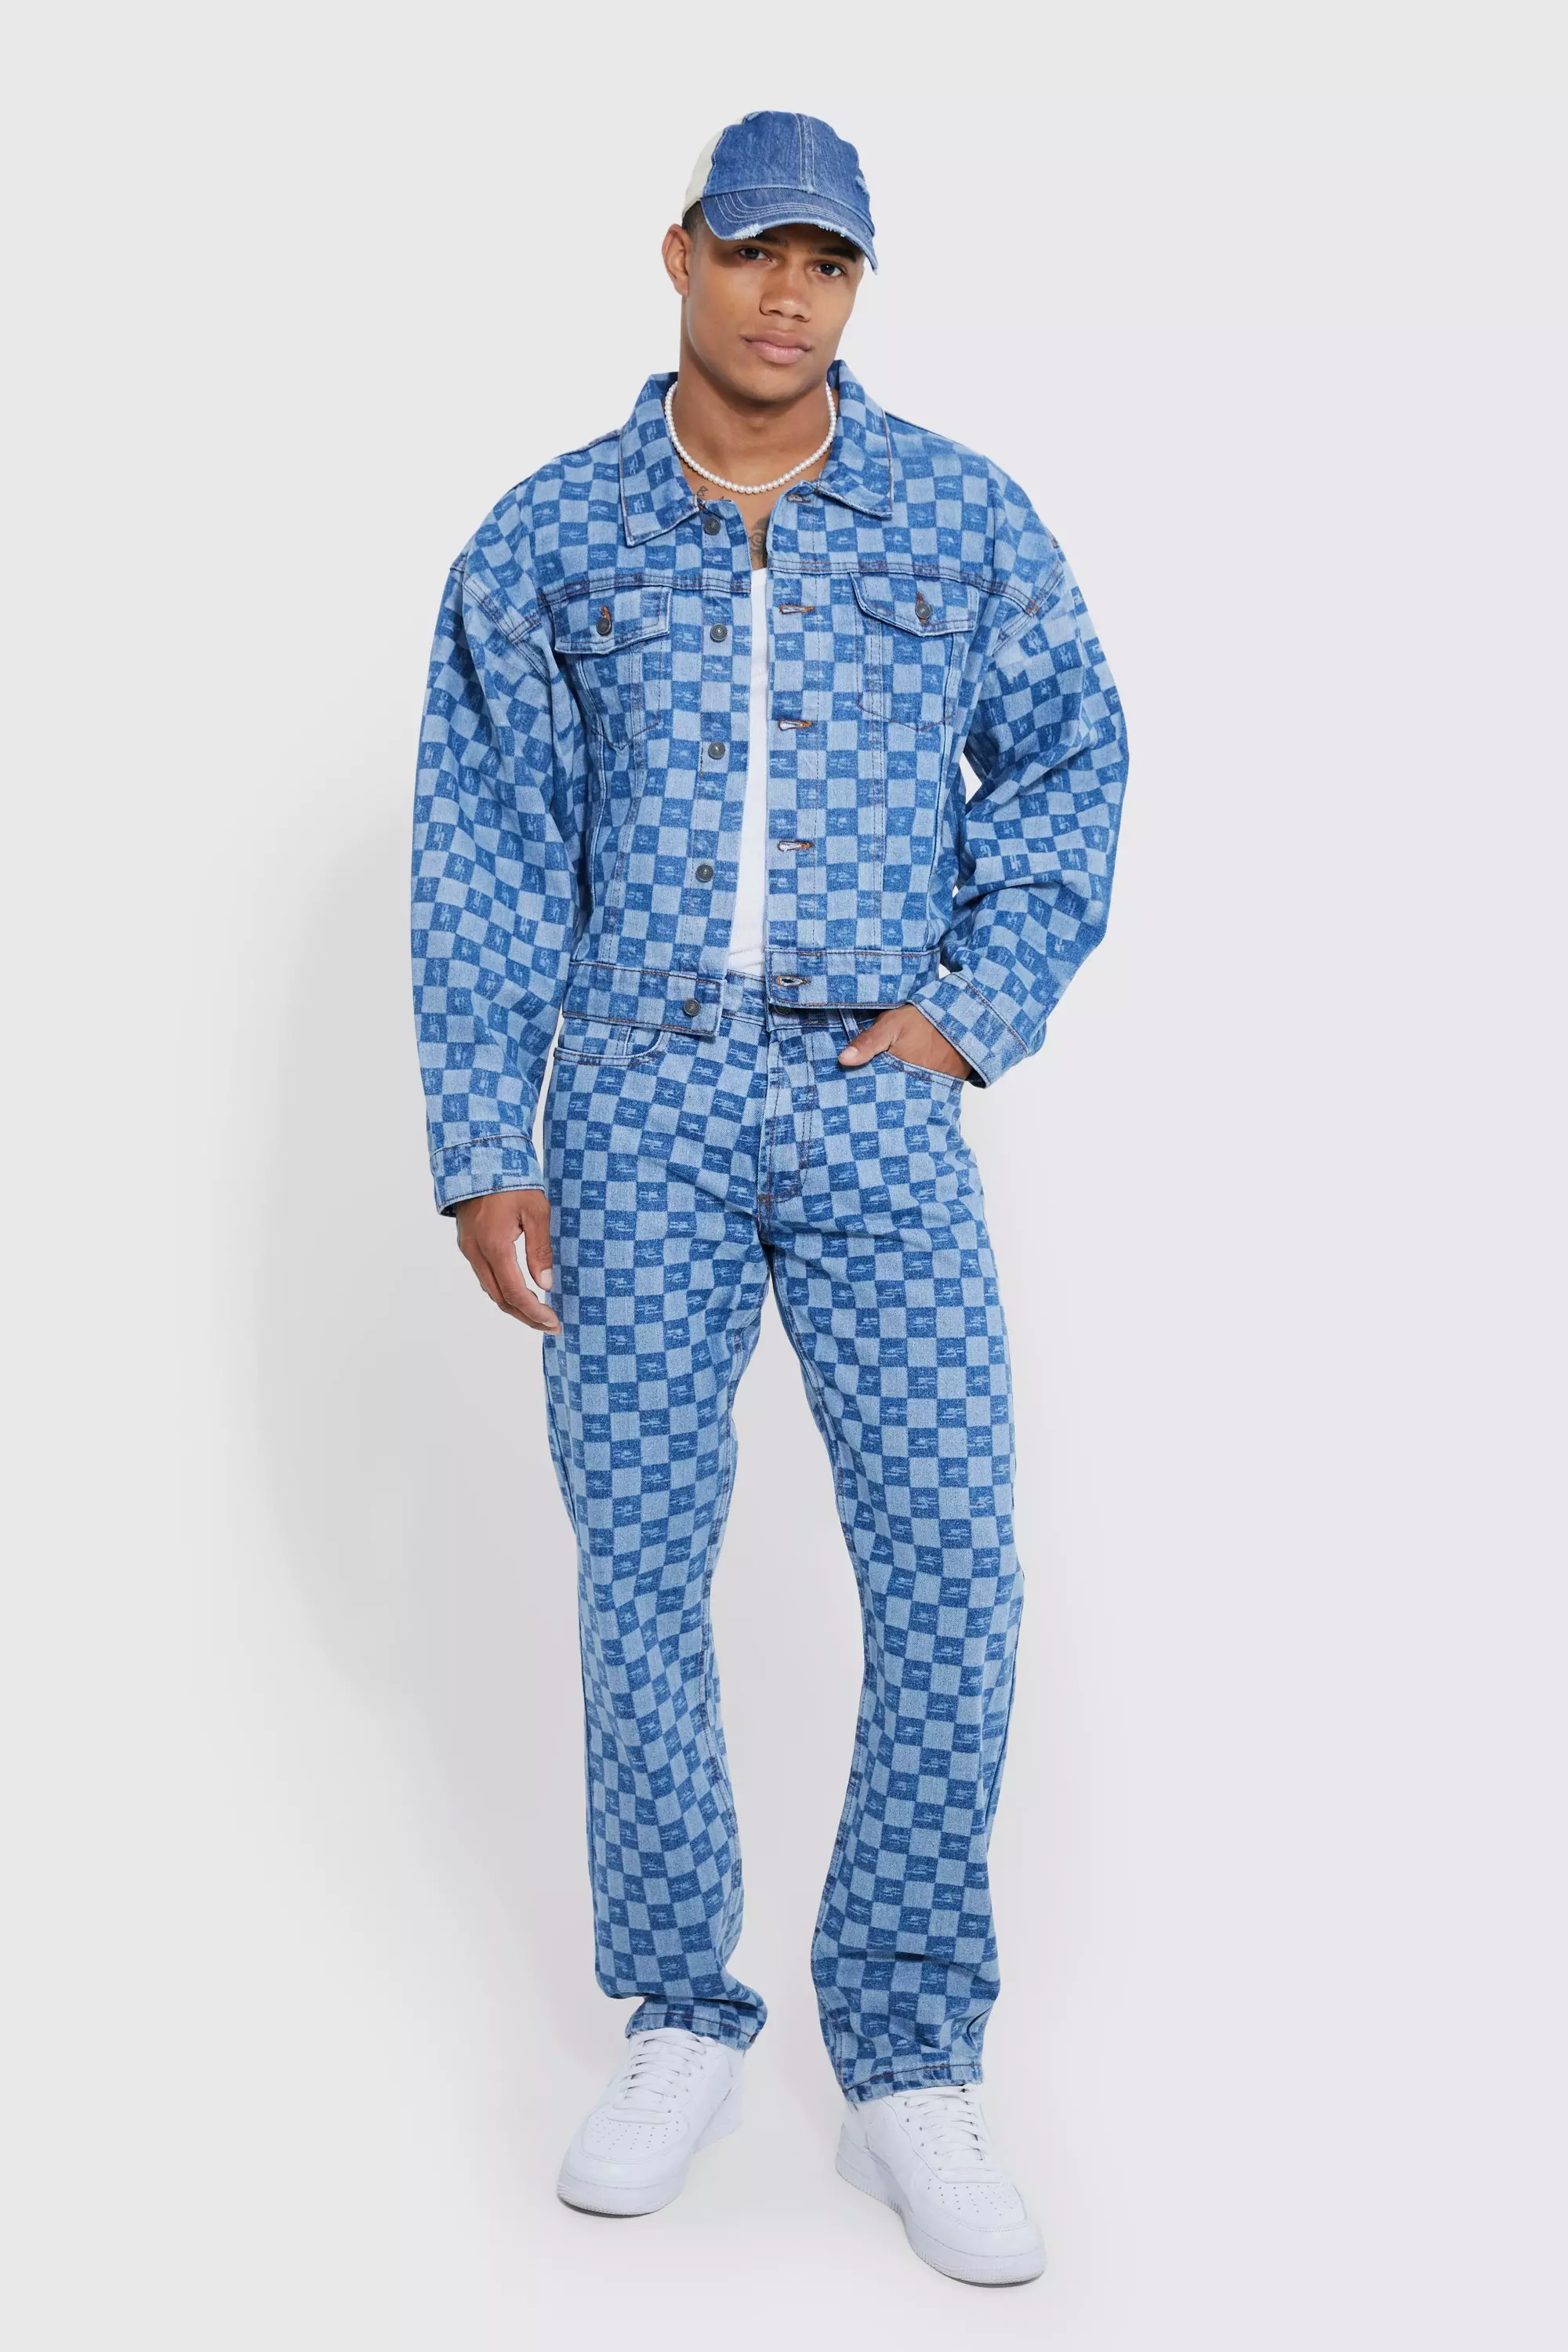 Louis Vuitton Monogram Bandana Blue Hoodies Sweatshirt - Shop trending  fashion in USA and EU